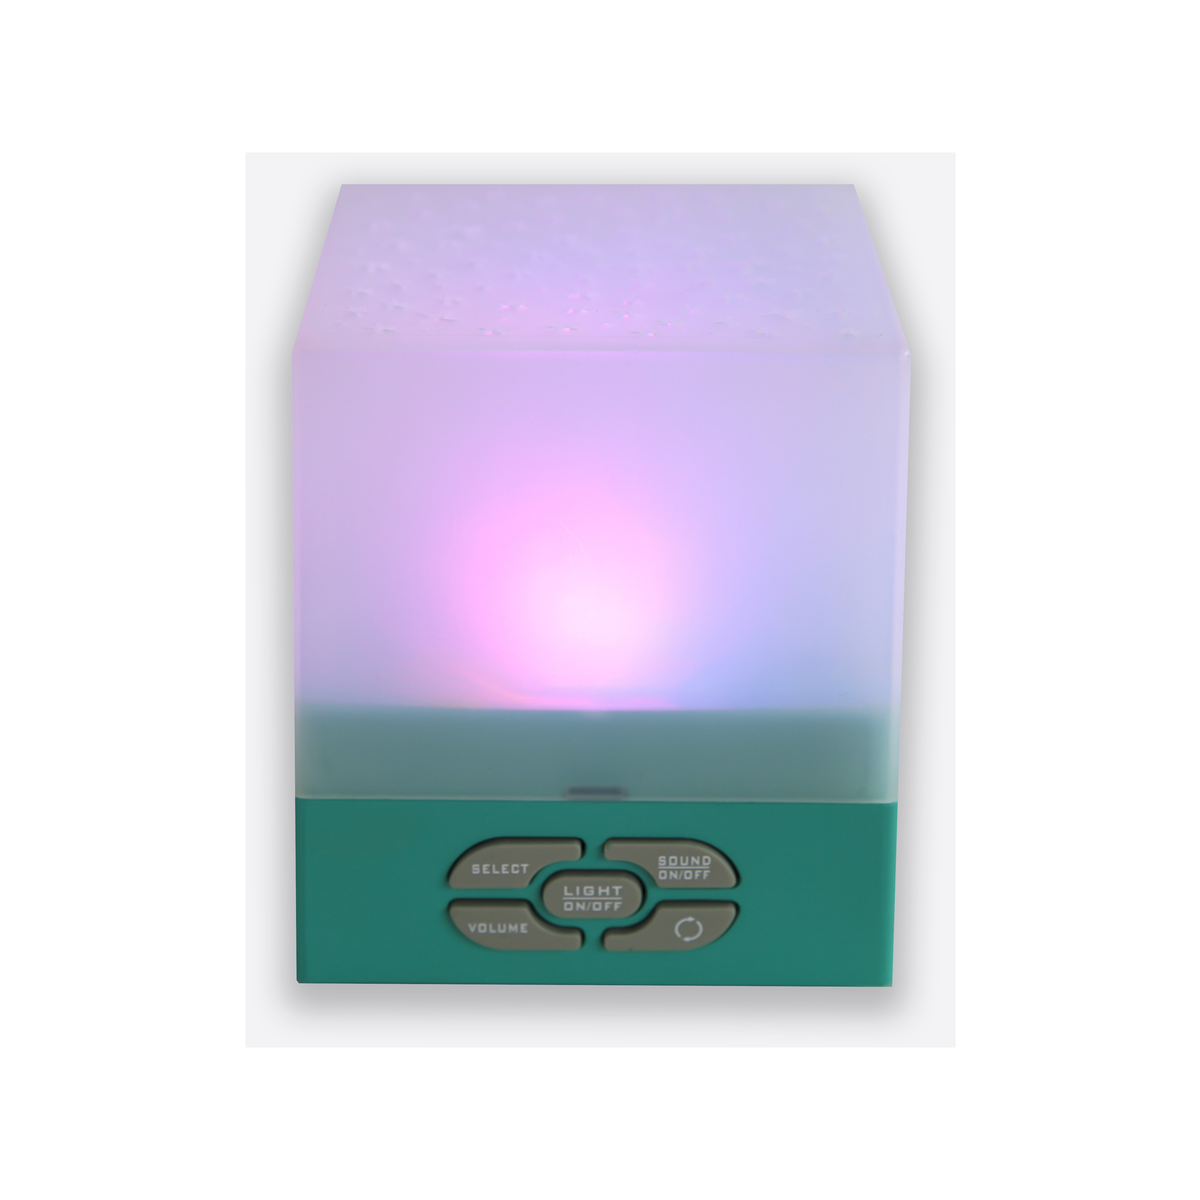 Playette Playette Star Glow Cube